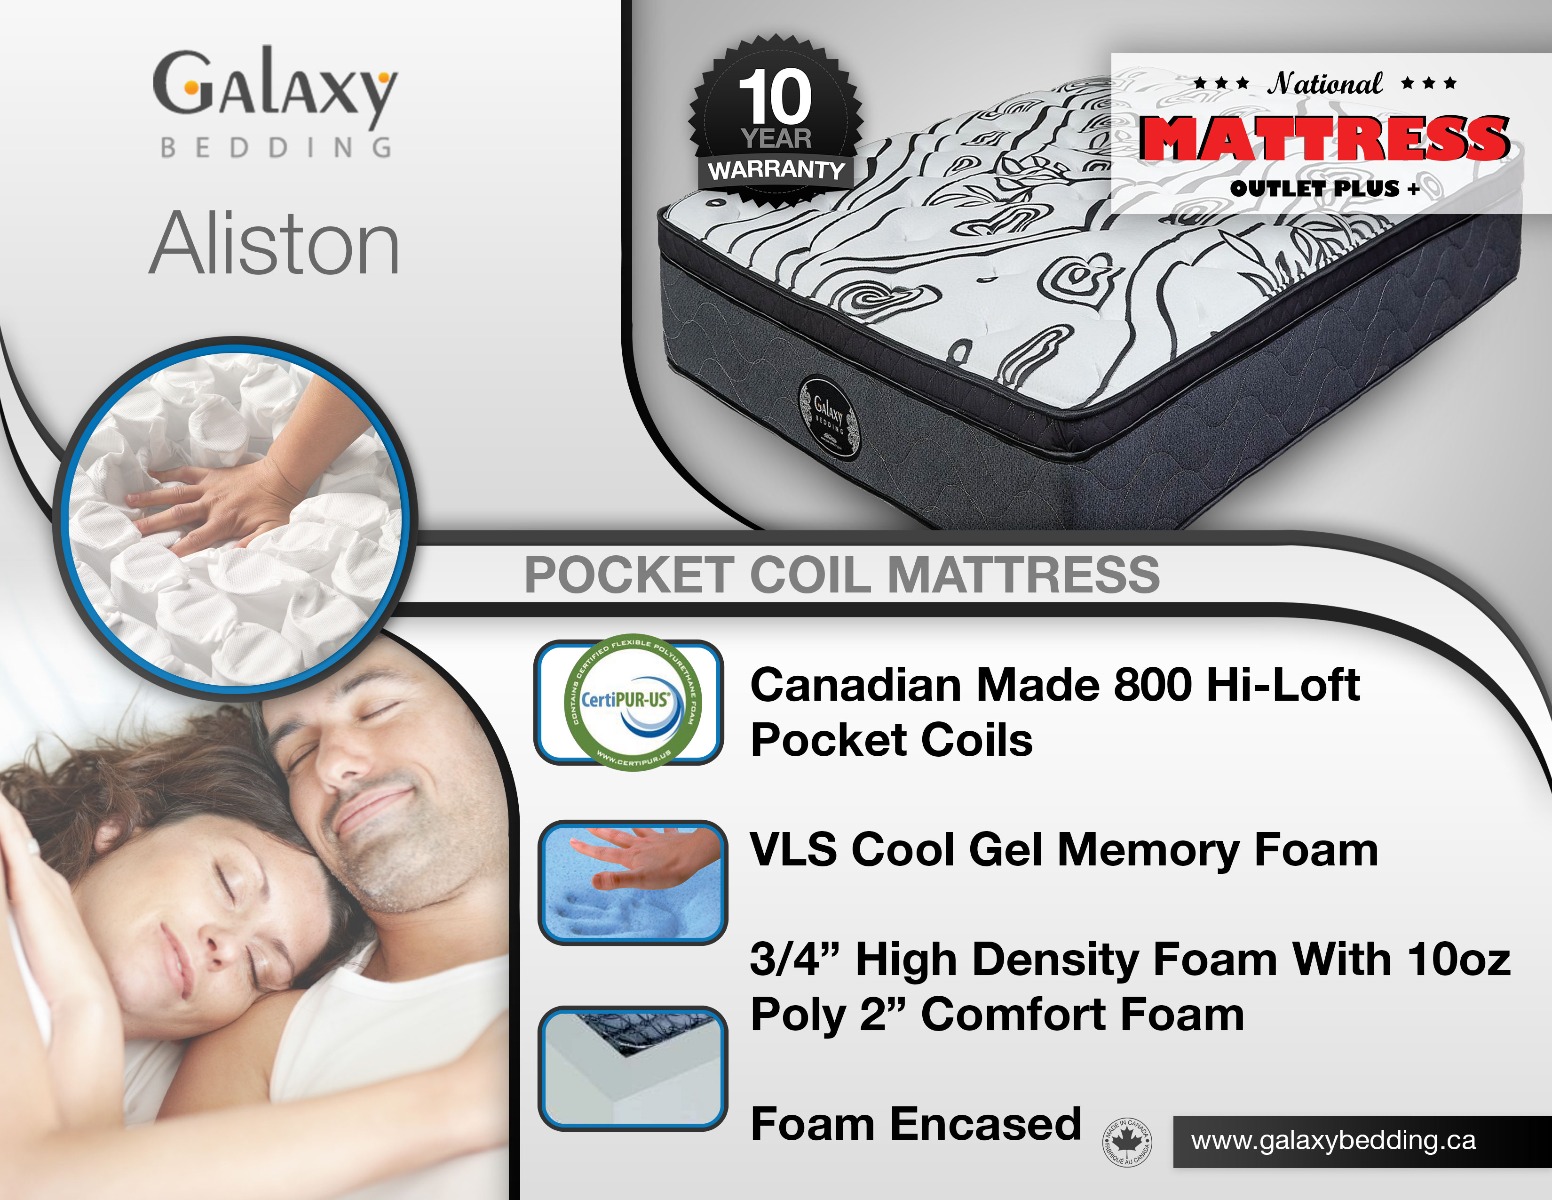 Galaxy Aliston Pocket Coil Mattress Spec